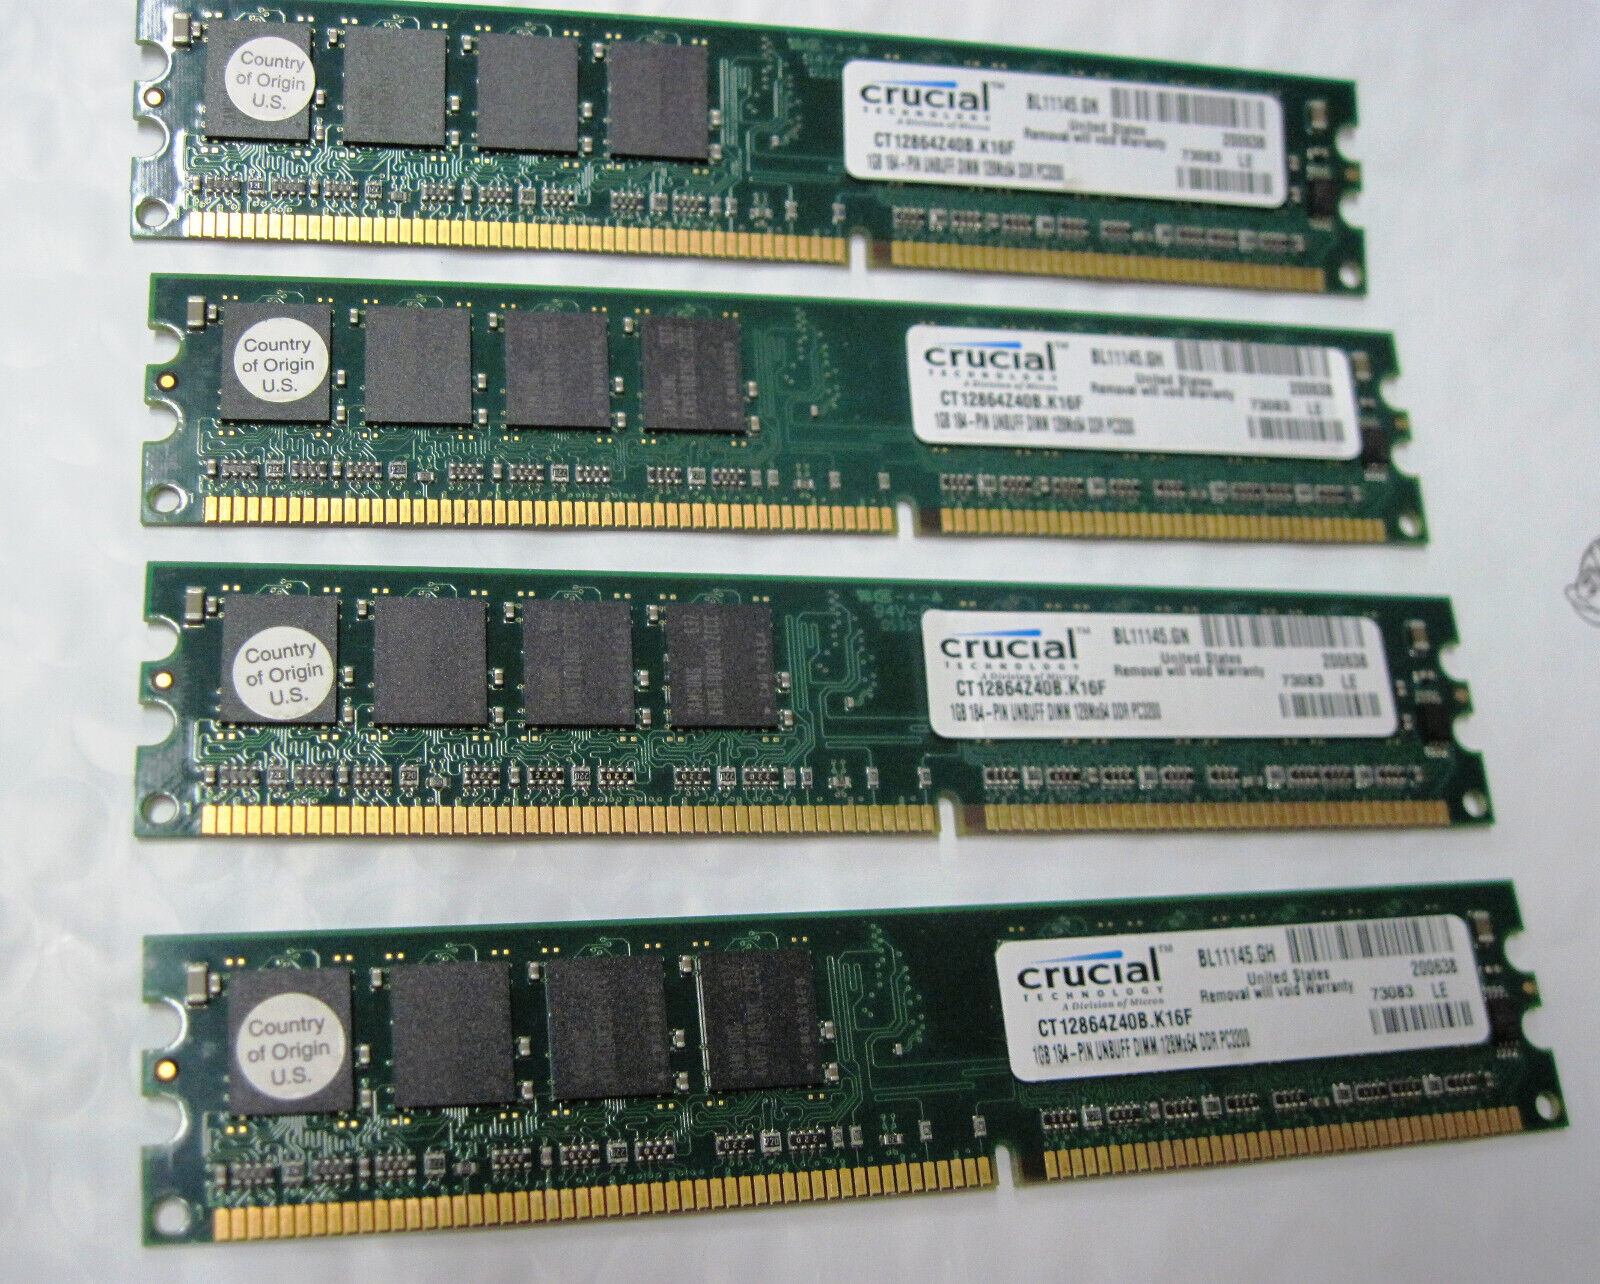 Crucial DDR 400 (PC 3200) Desktop Memory [4 x 1GB = 4GB] USA